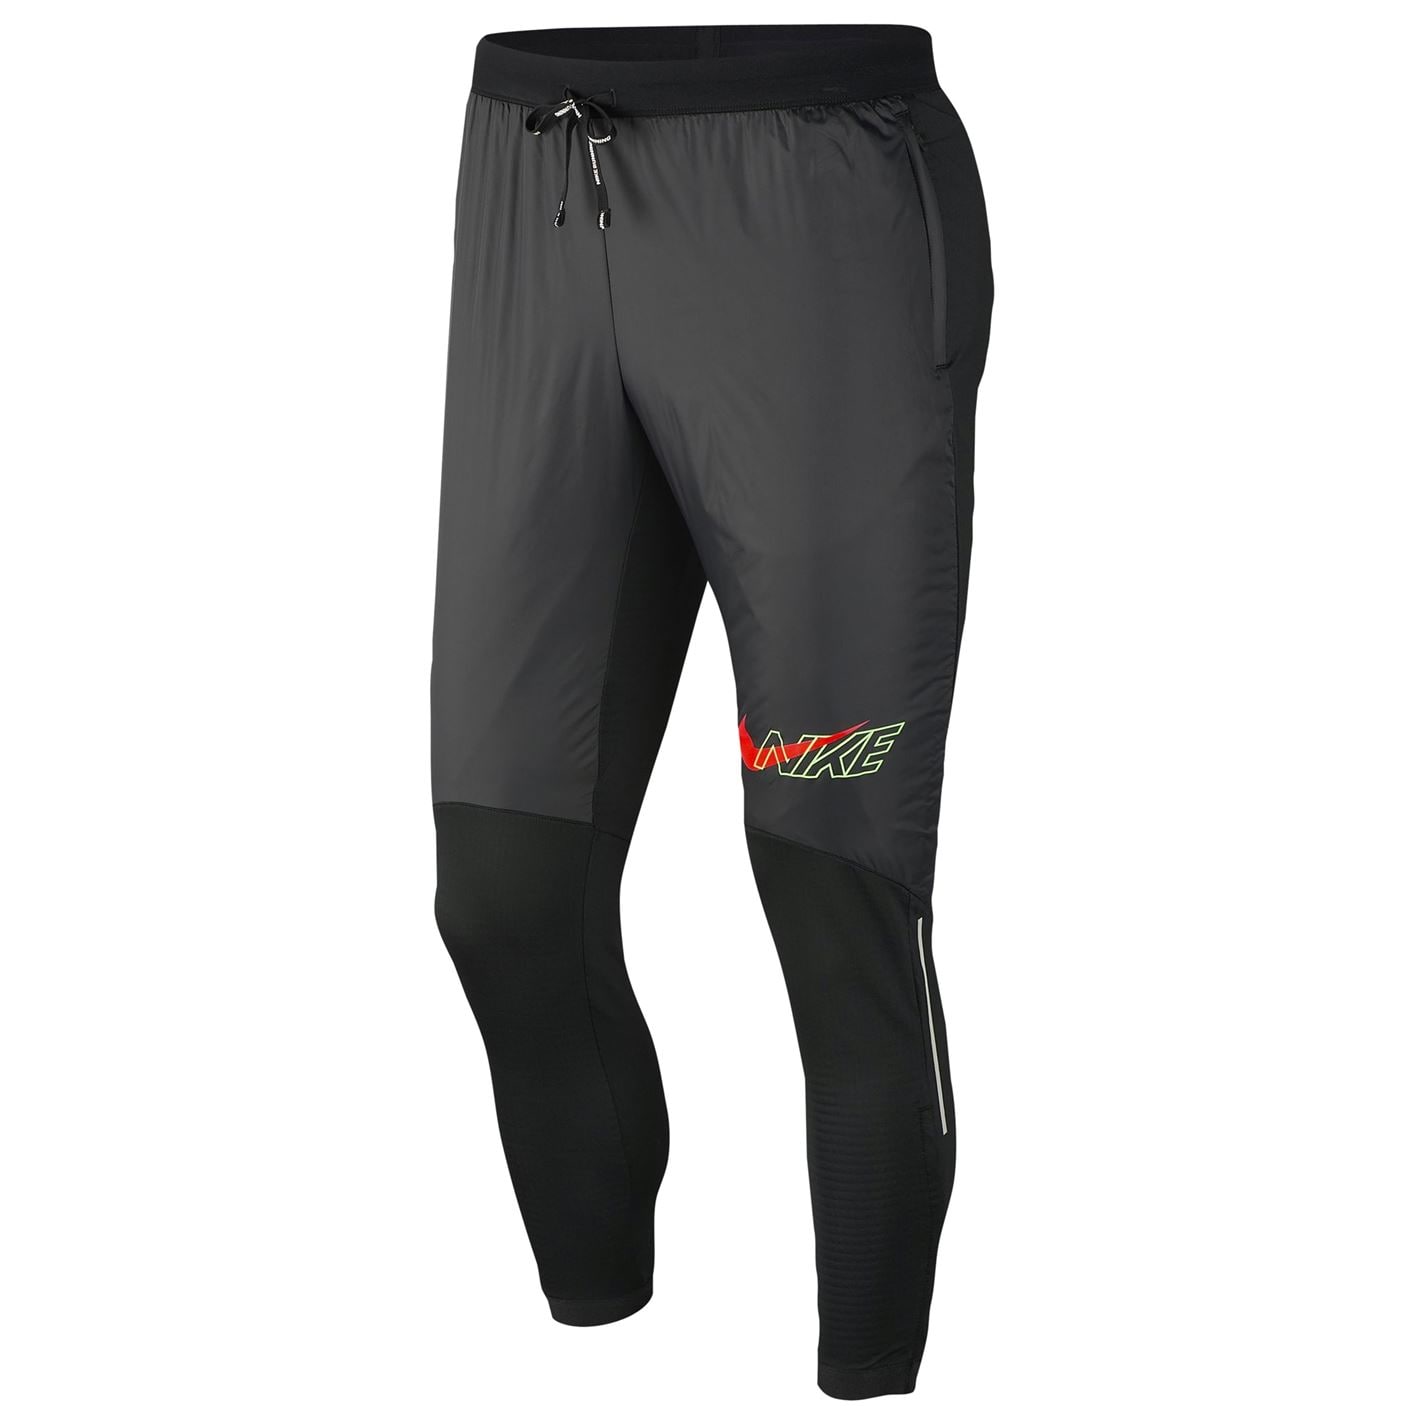 Pantaloni de trening Nike Elite pentru Barbati negru verde